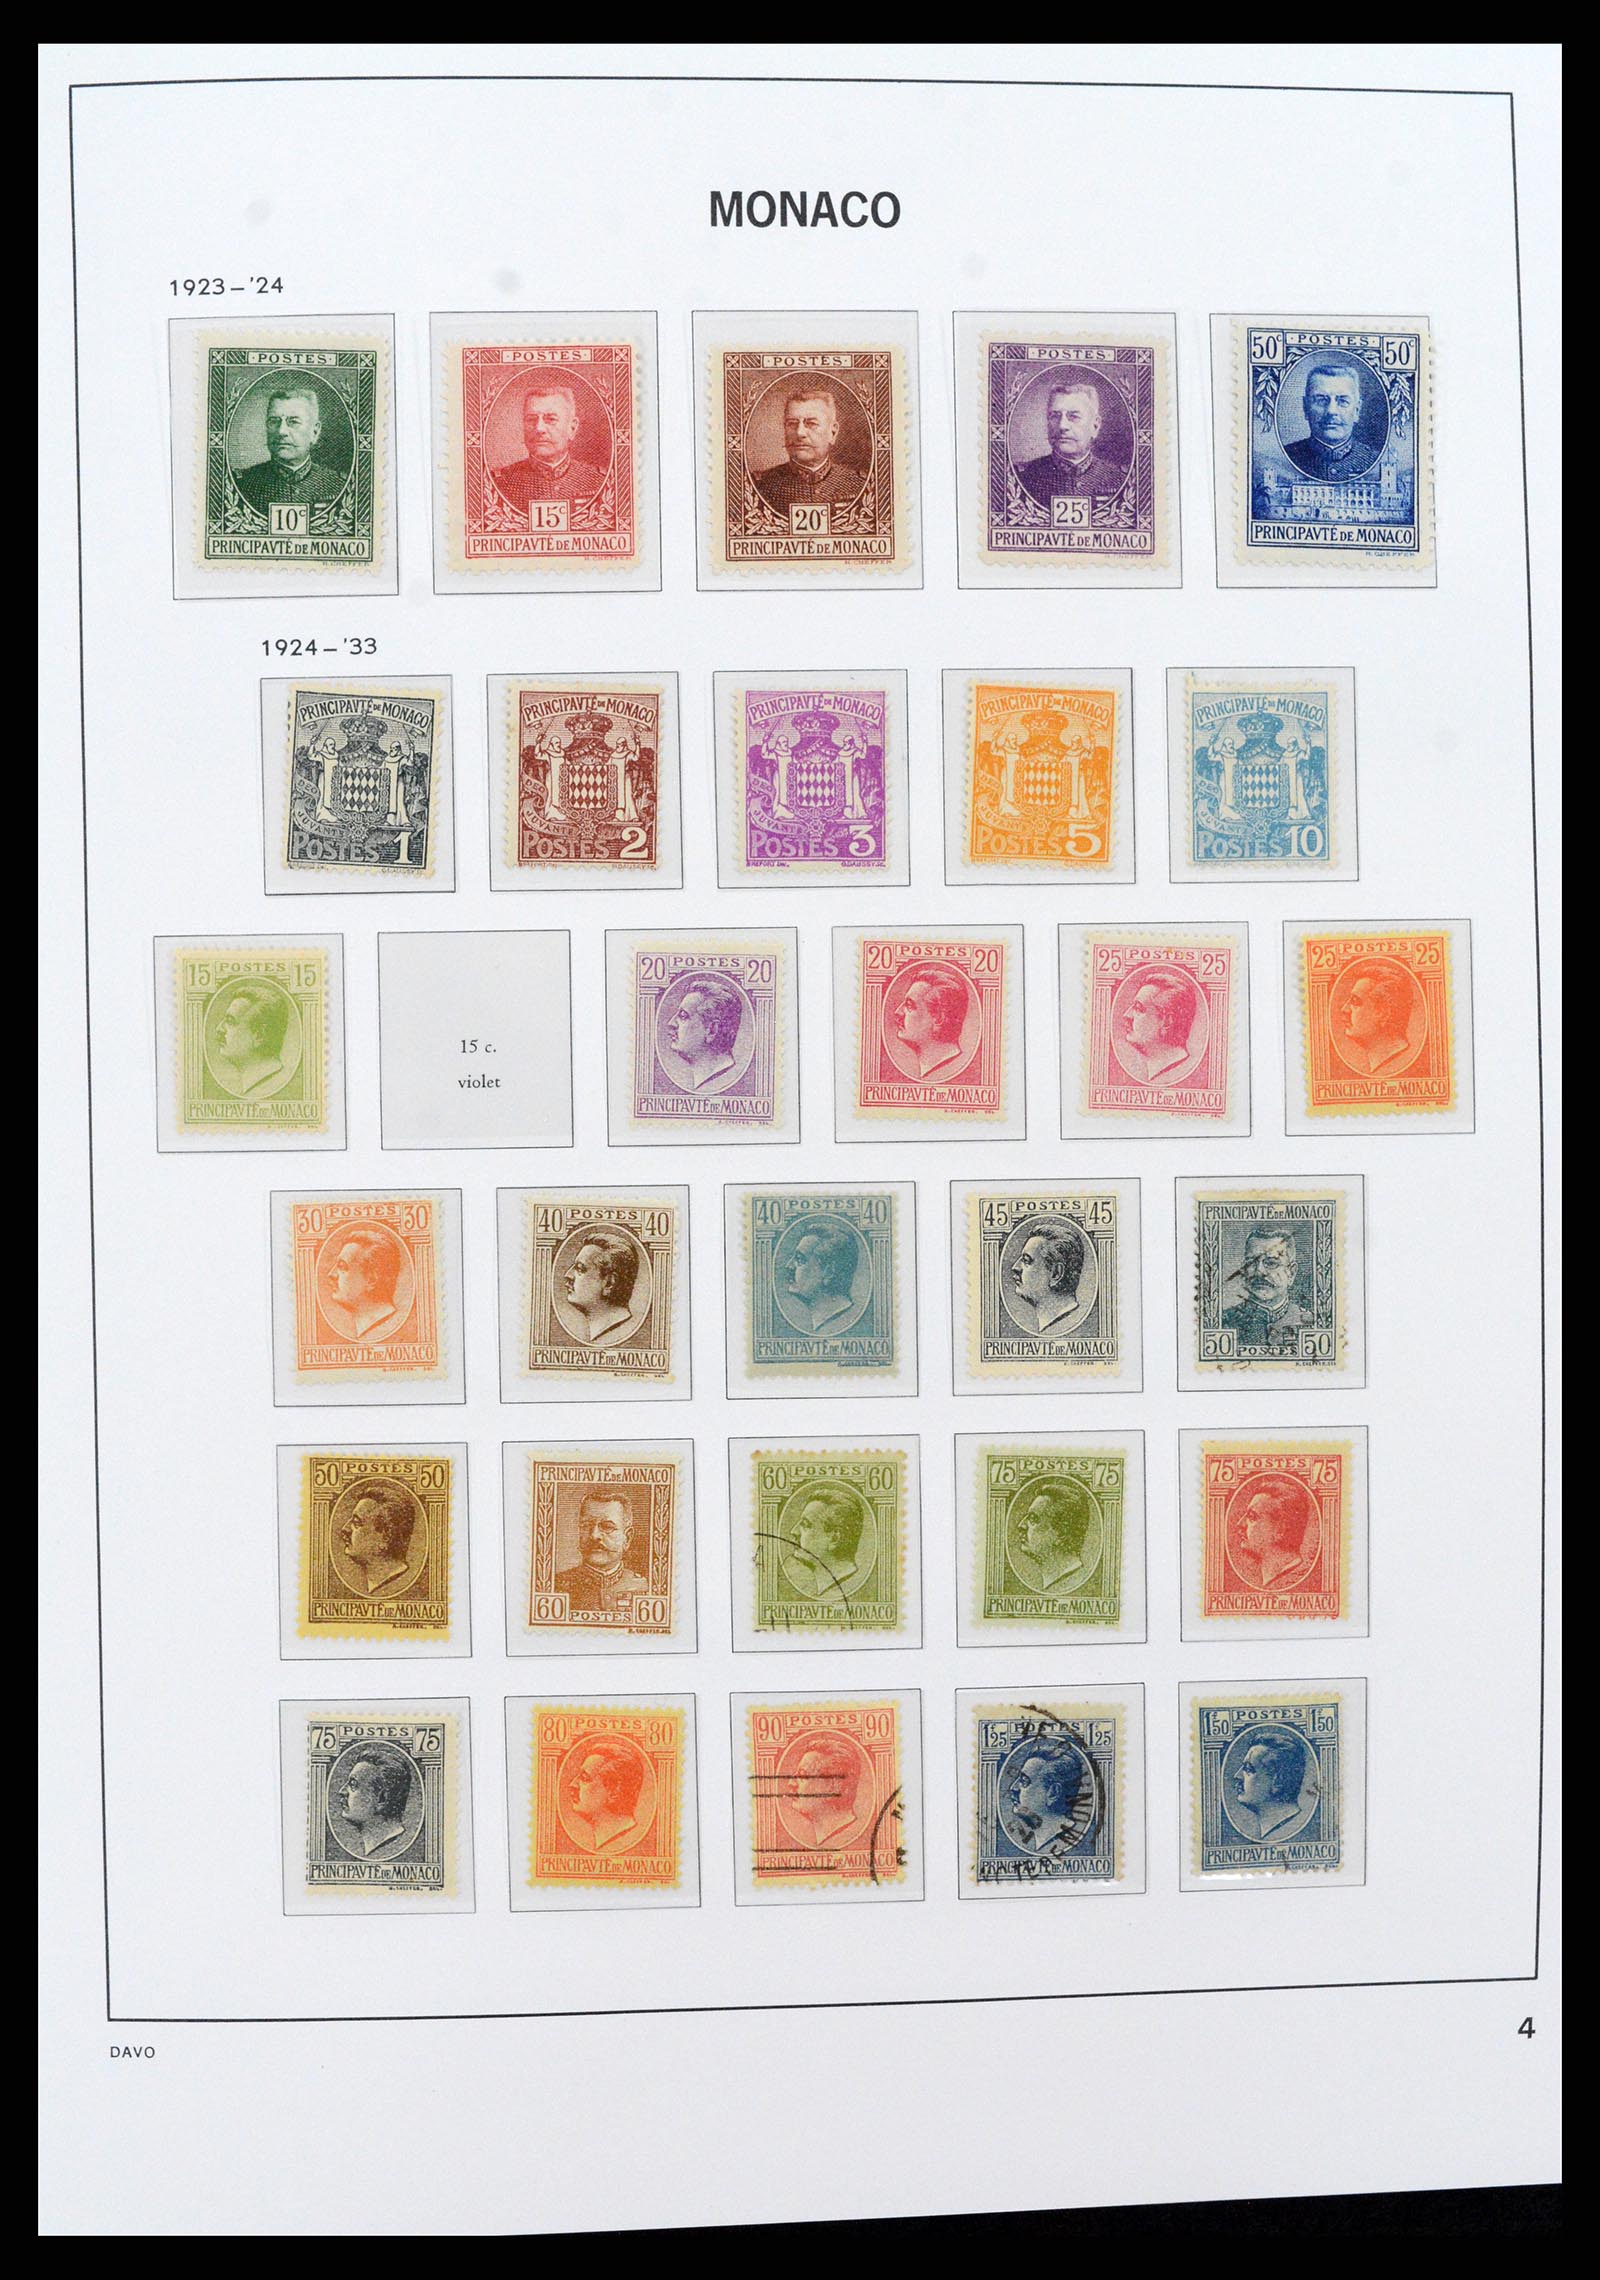 37279 004 - Stamp collection 37279 Monaco 1885-1969.